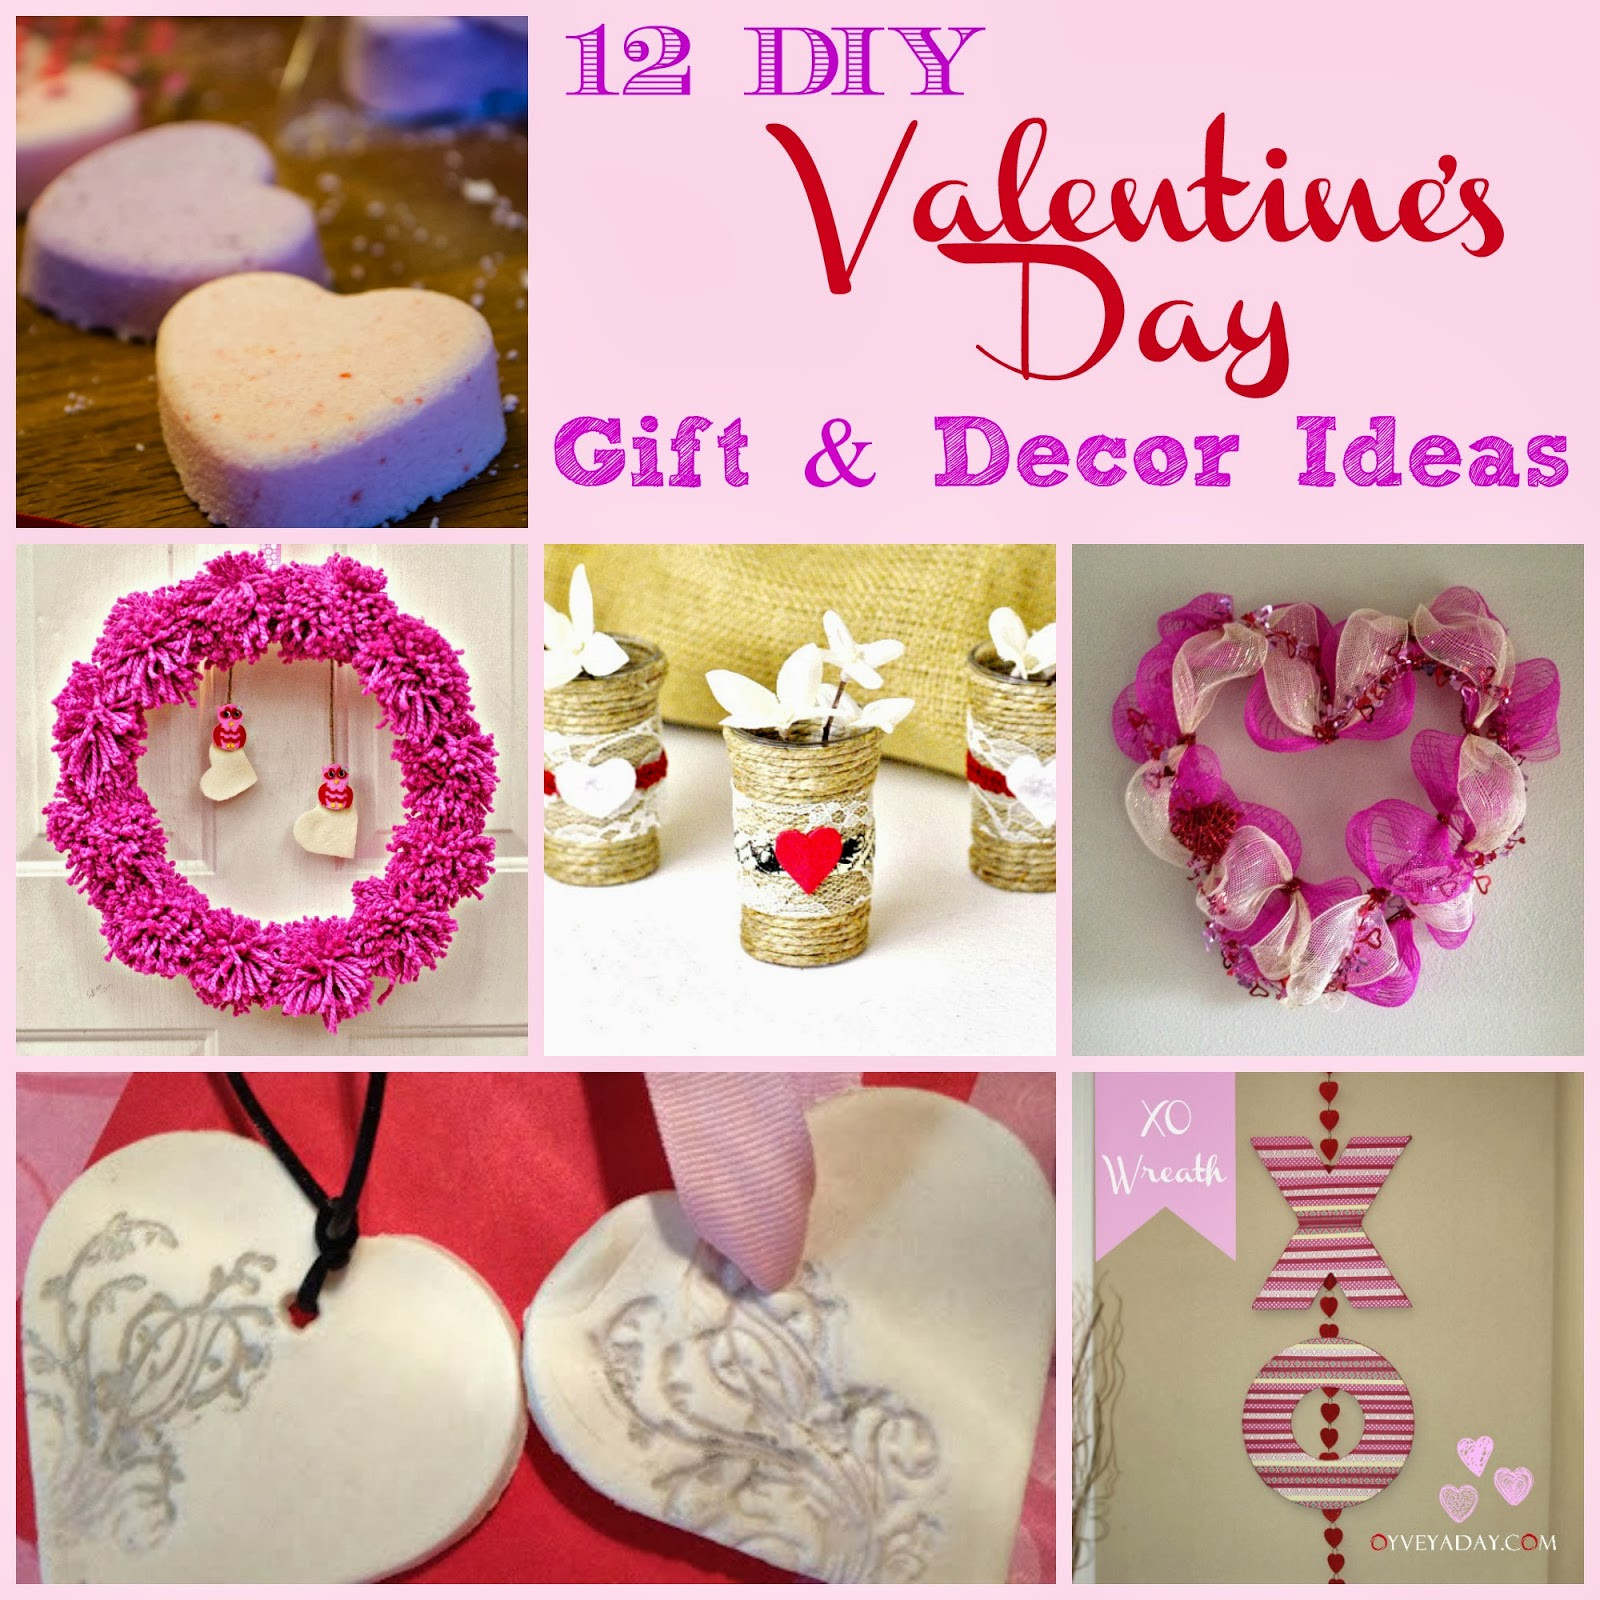 Handmade Valentine Gift Ideas
 12 DIY Valentine s Day Gift & Decor Ideas Outnumbered 3 to 1